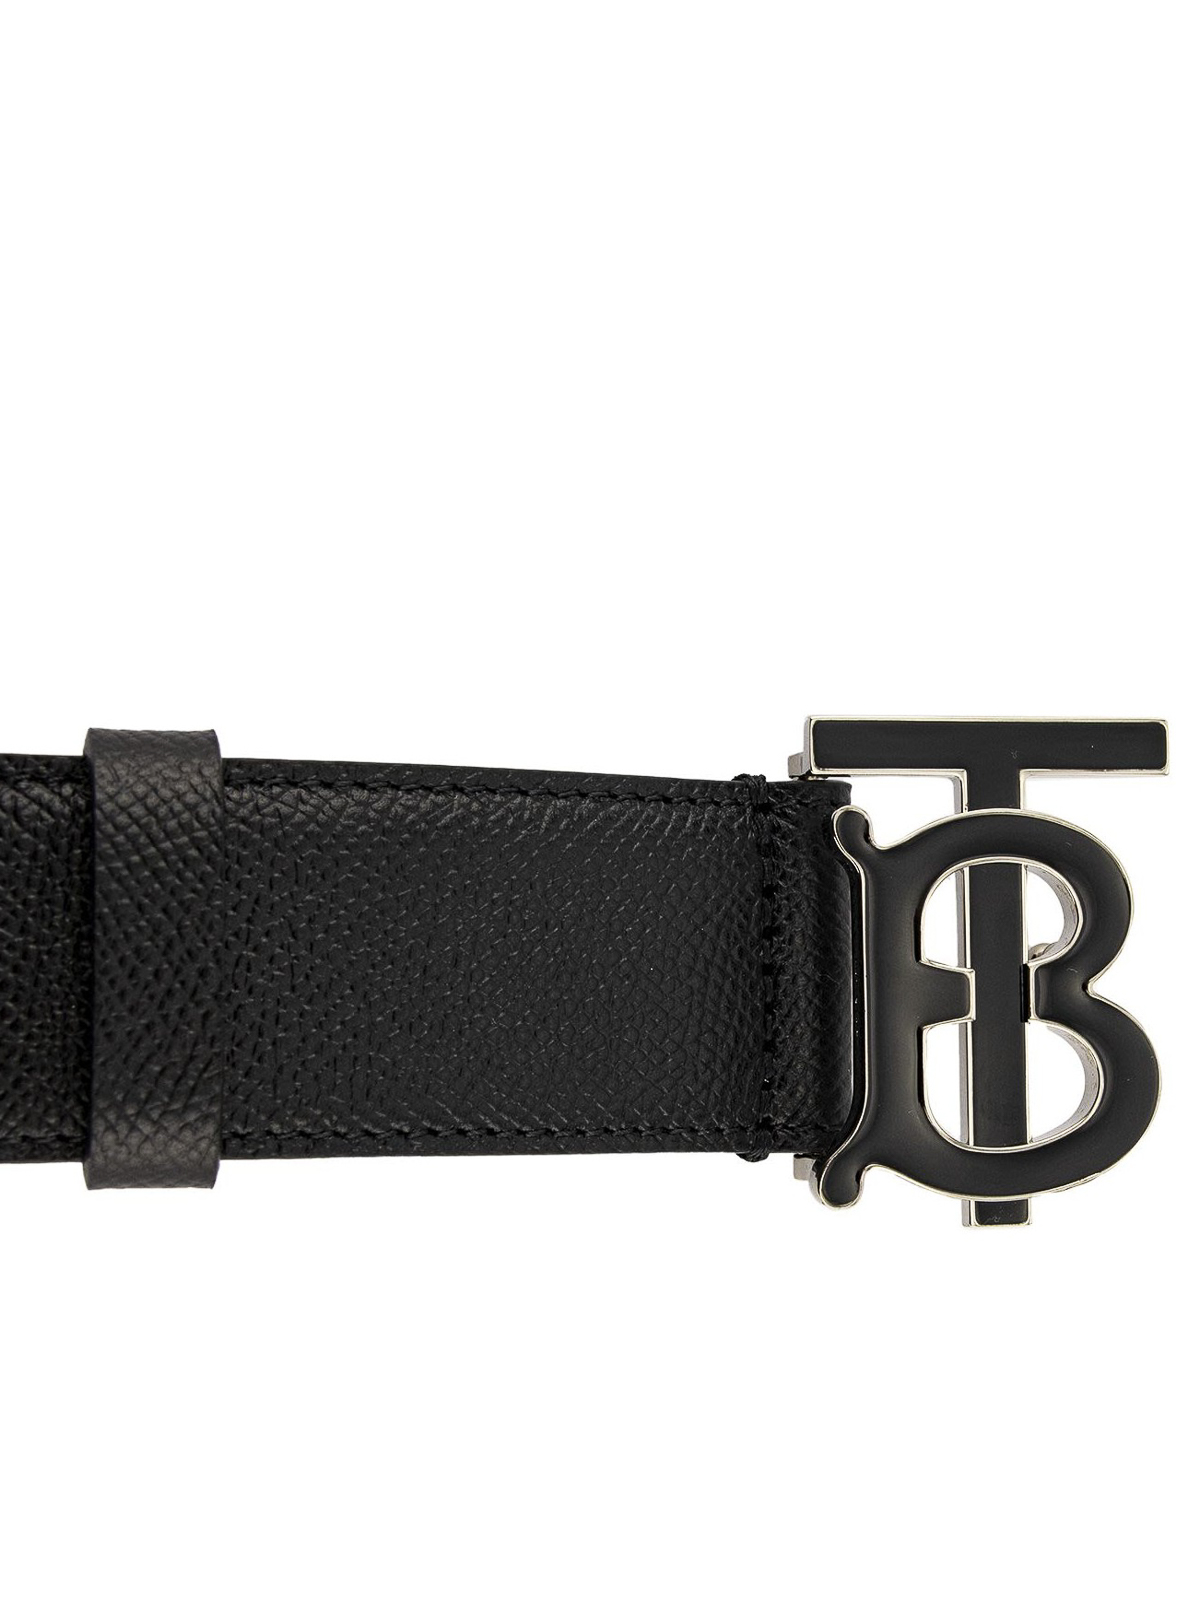 Grainy leather belt with monogram buckle